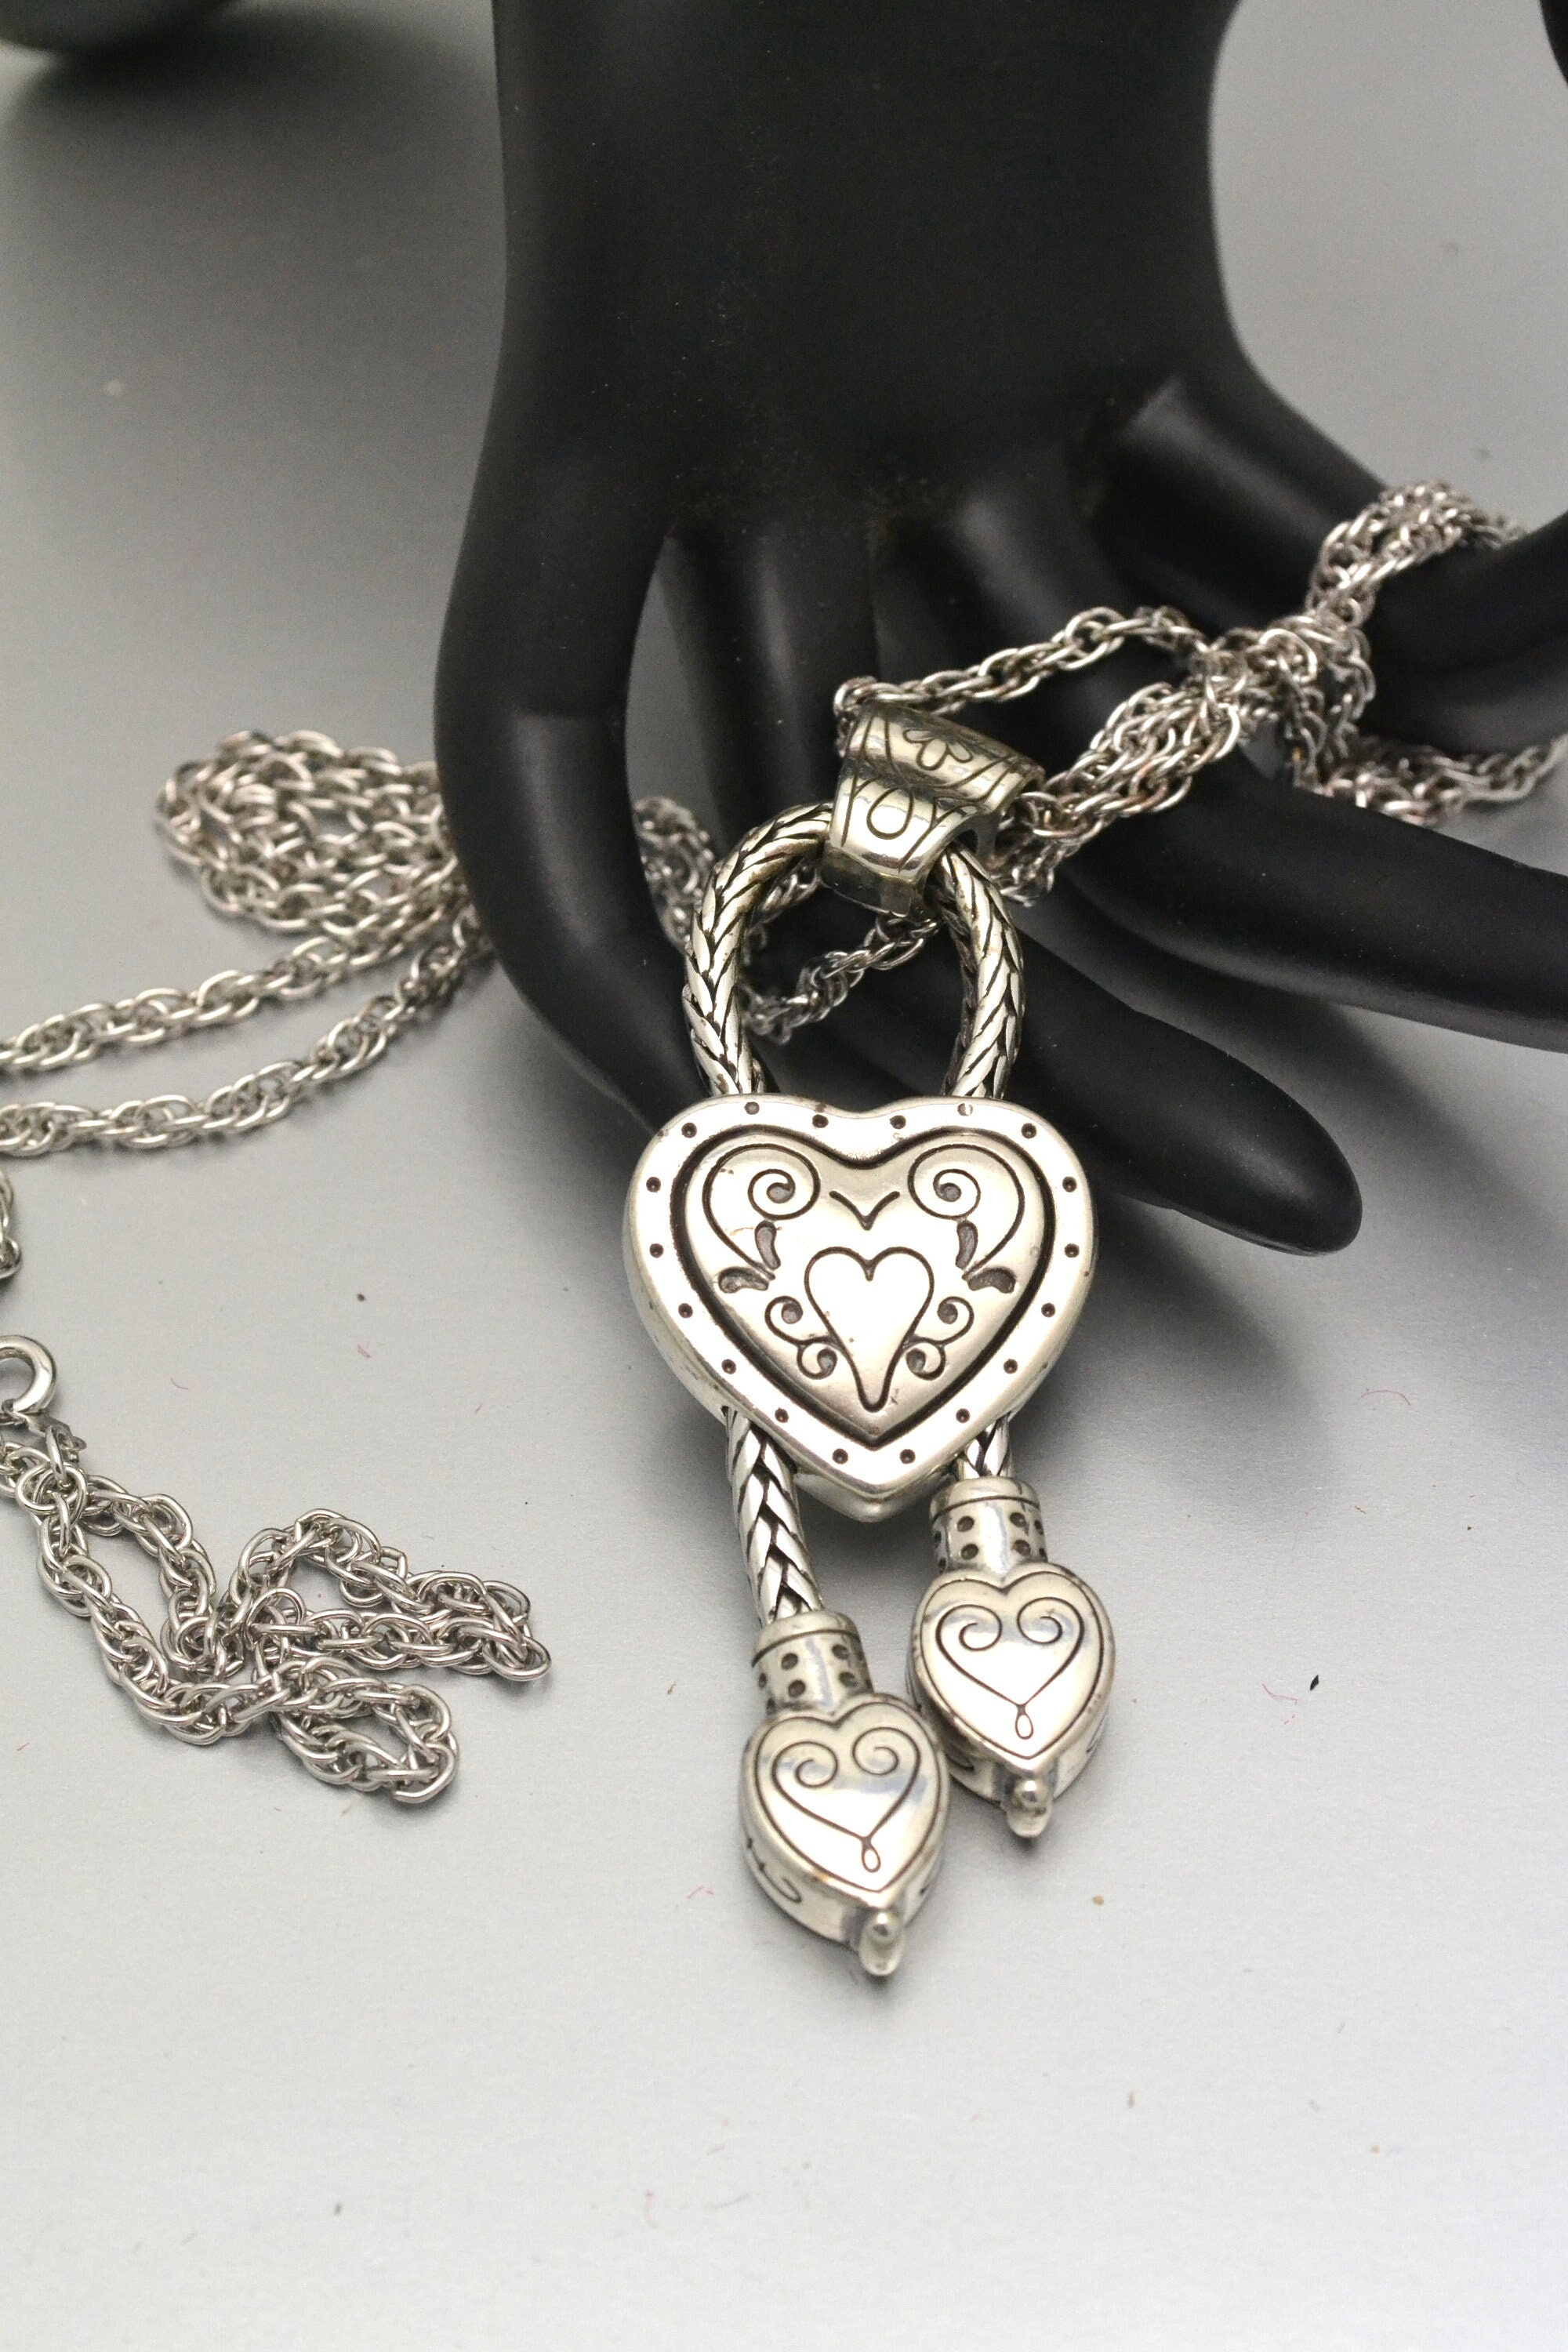 Heart Necklace, Silver, handmade | Bowman Originals, Sarasota, 941-302-9594